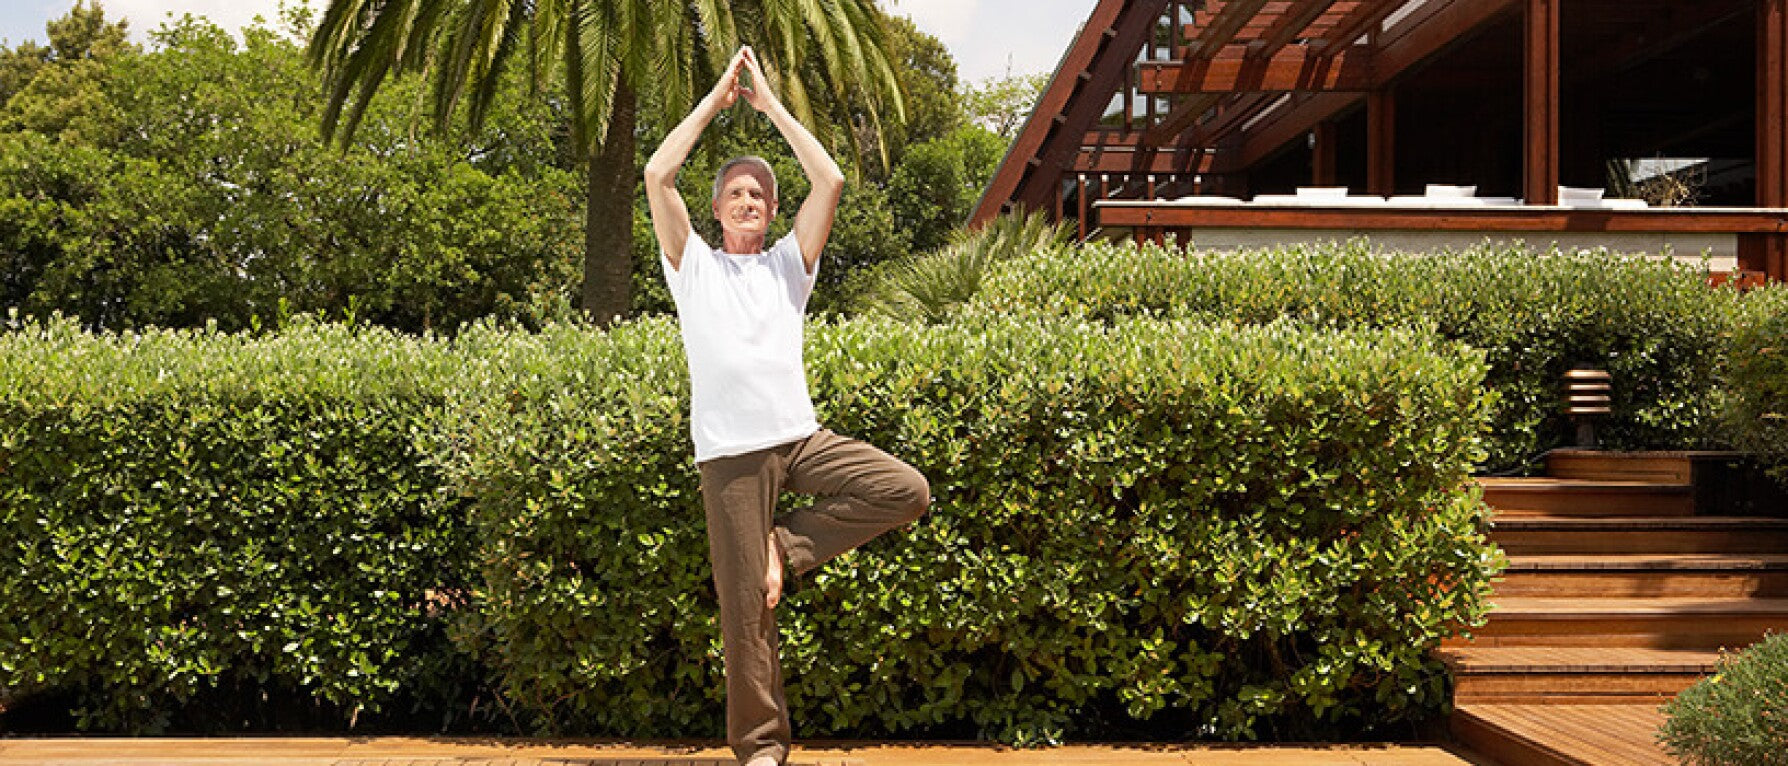 Gentle Yoga For Seniors, Free Beginner's Workout From Yoga Vitality